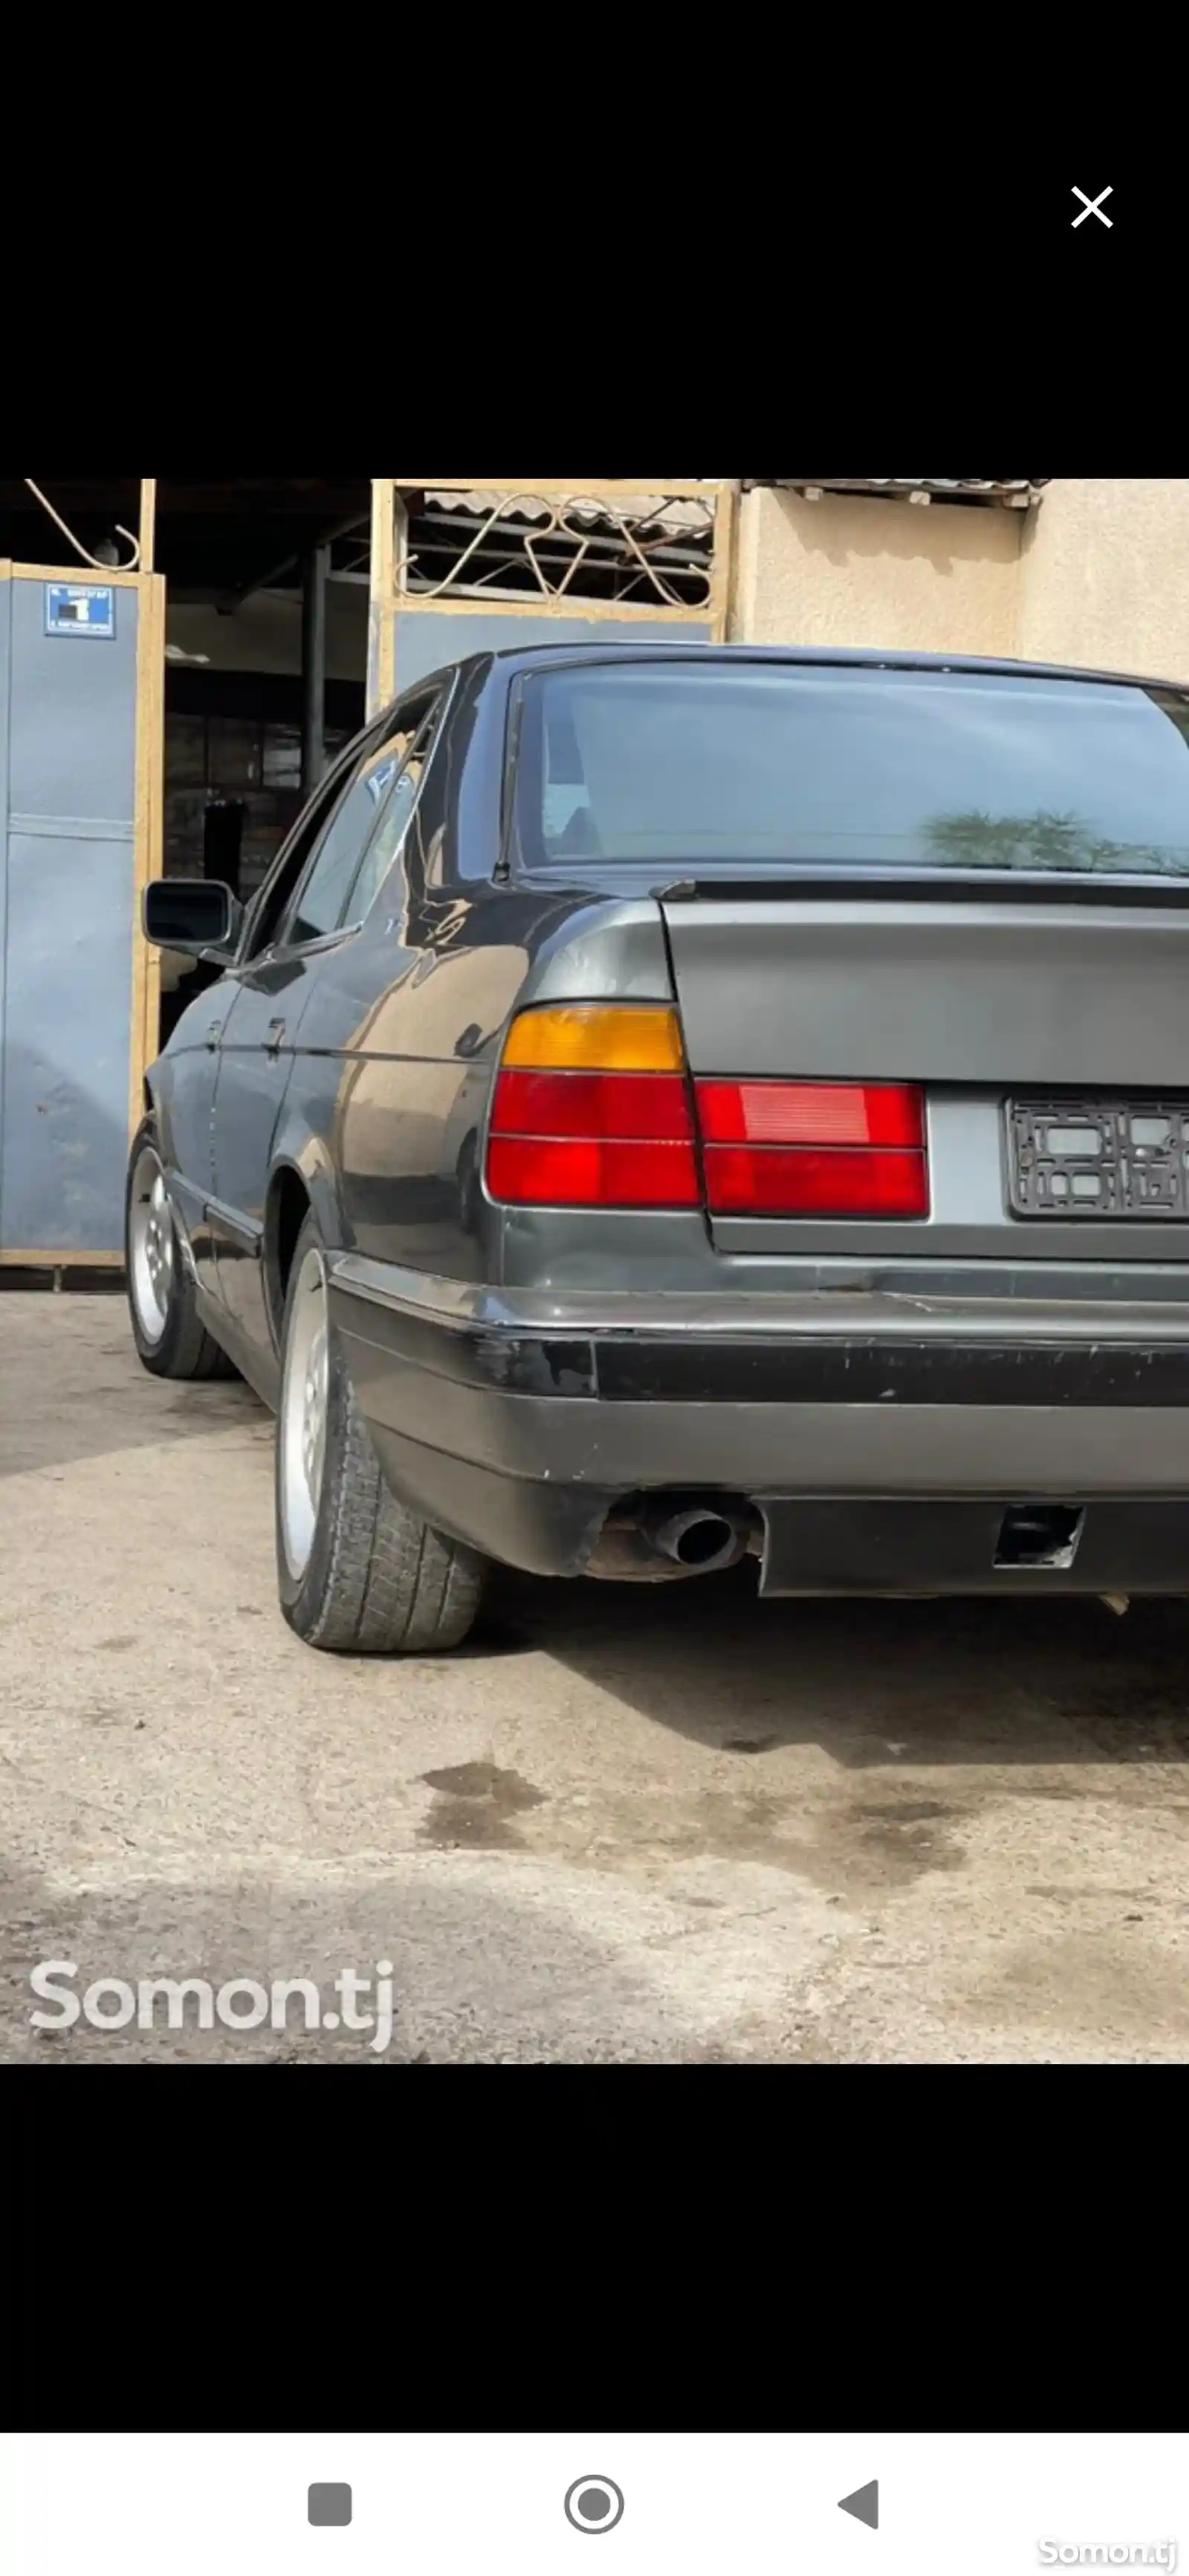 BMW 5 series, 1990-1